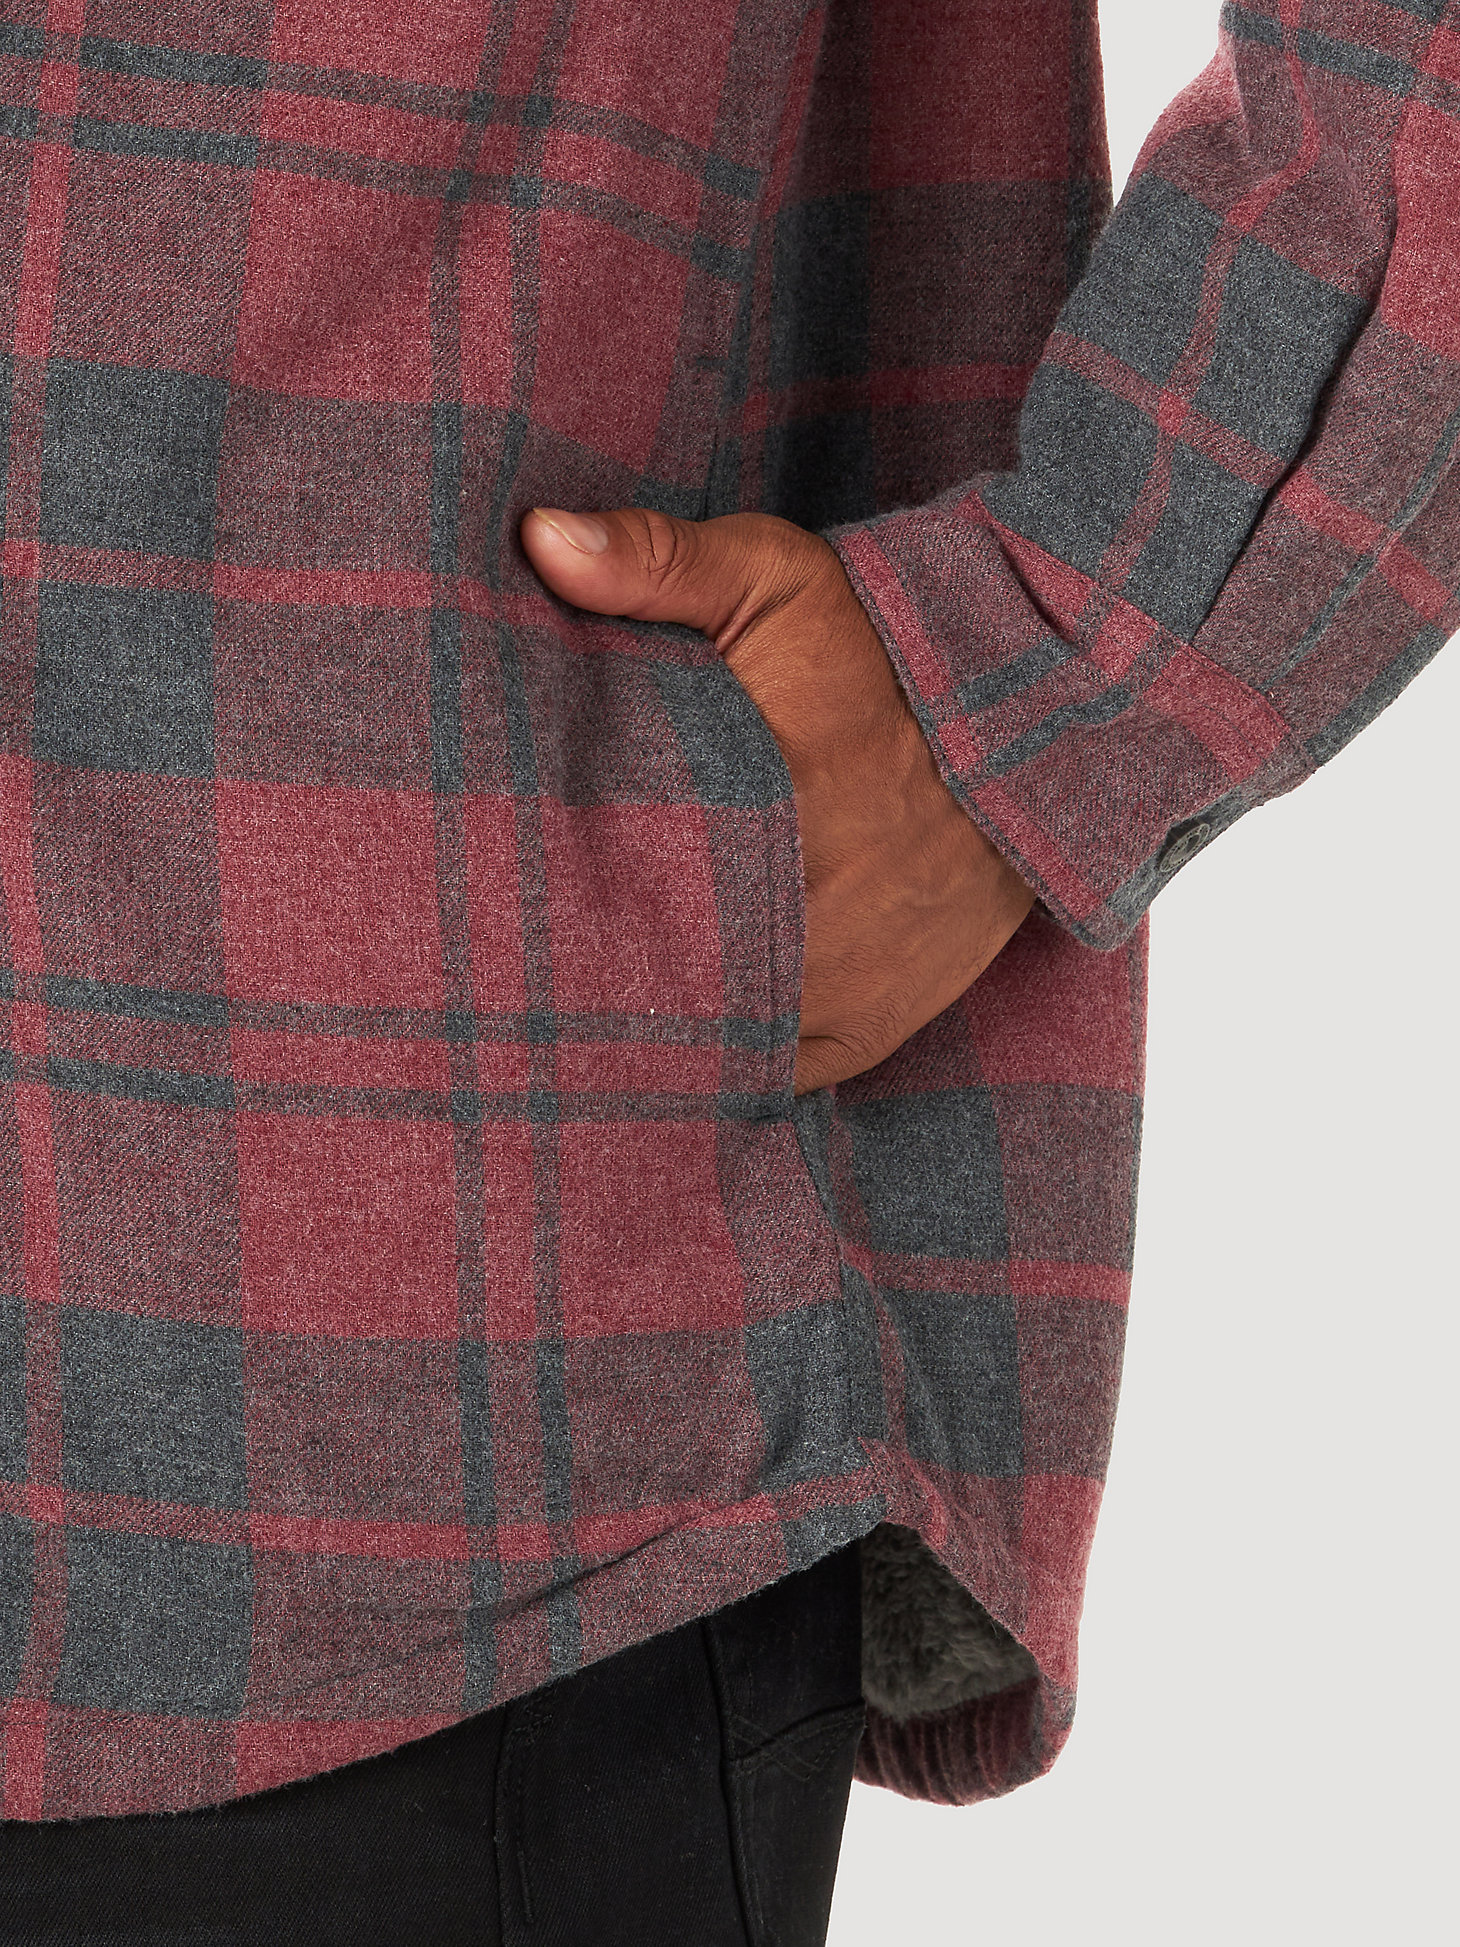 Men's Wrangler® Authentics Sherpa Lined Flannel Shirt in Zinfindel Heather alternative view 4